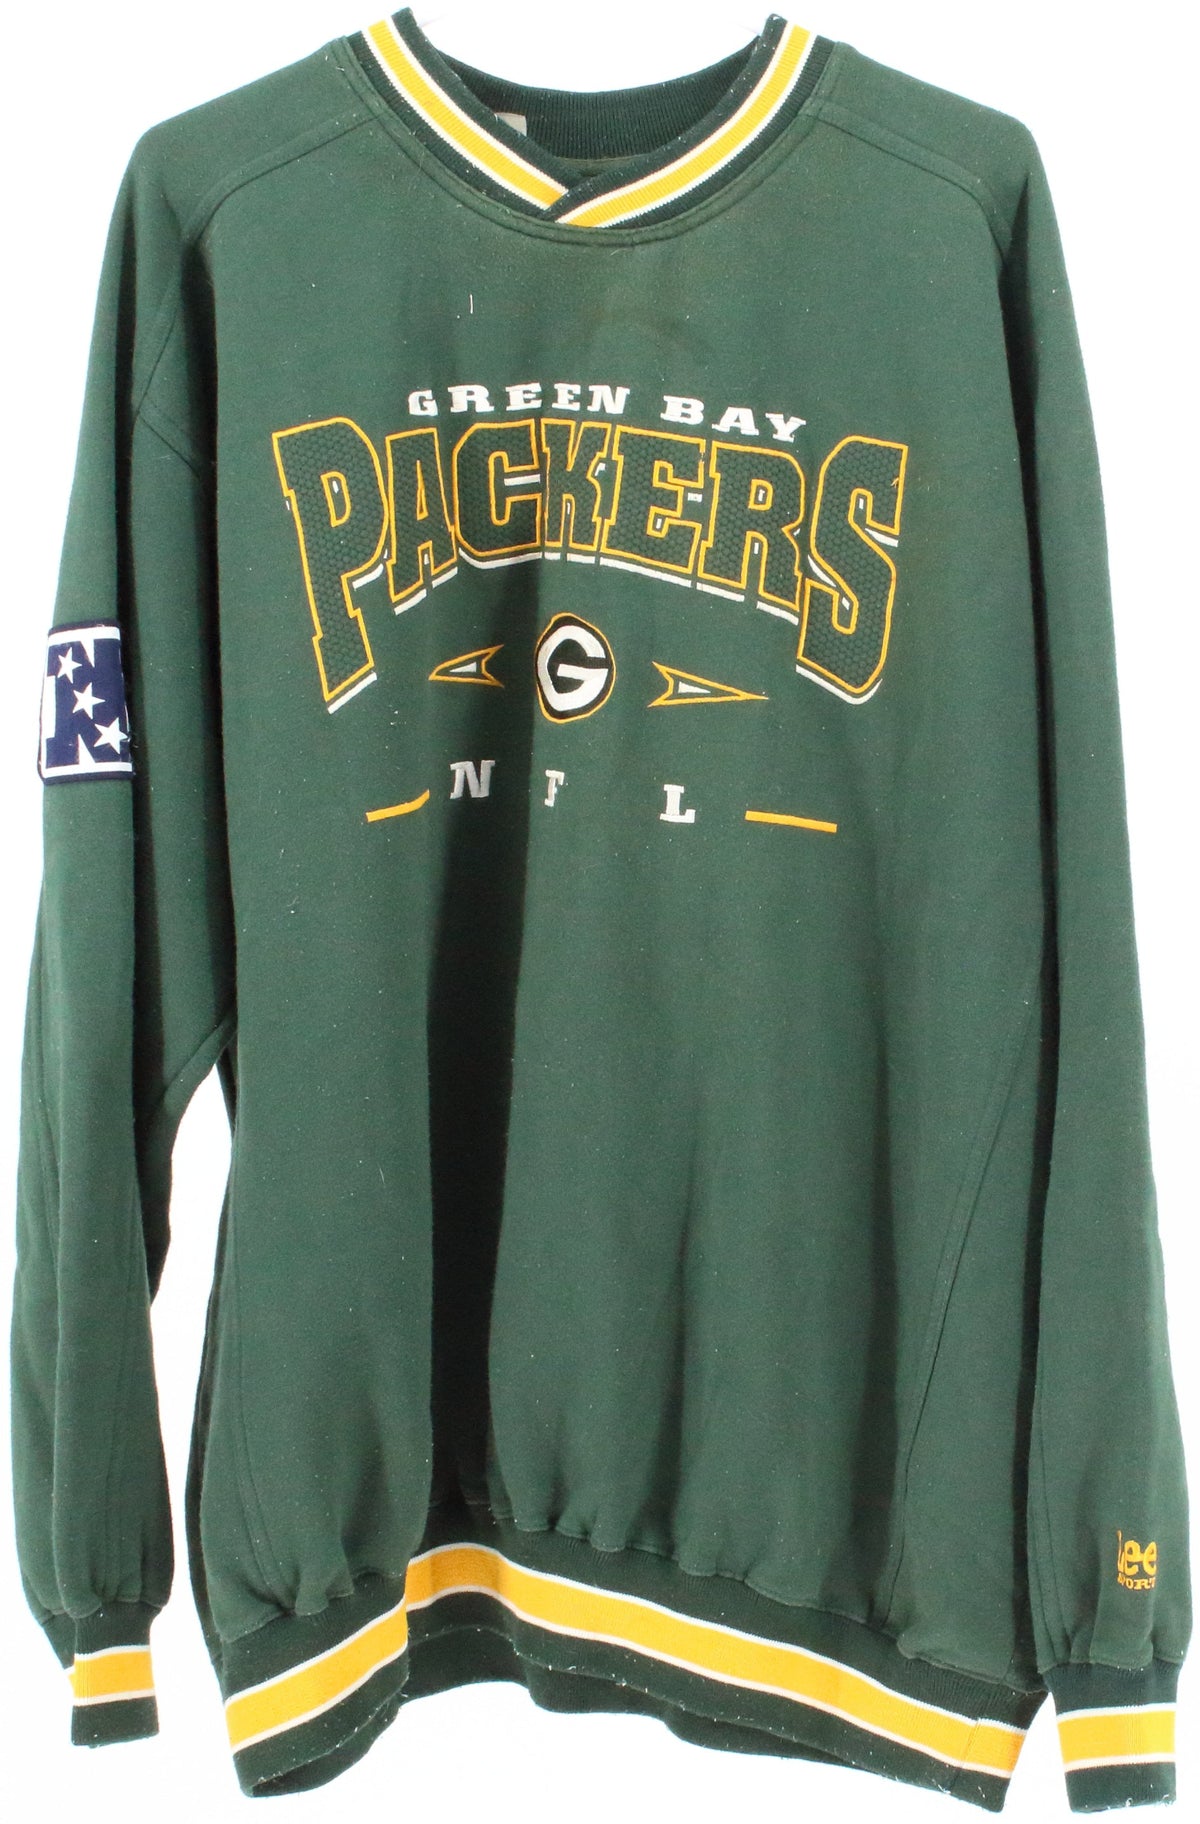 Lee Sport Green Bay Packers NFL Green Sweatshirt